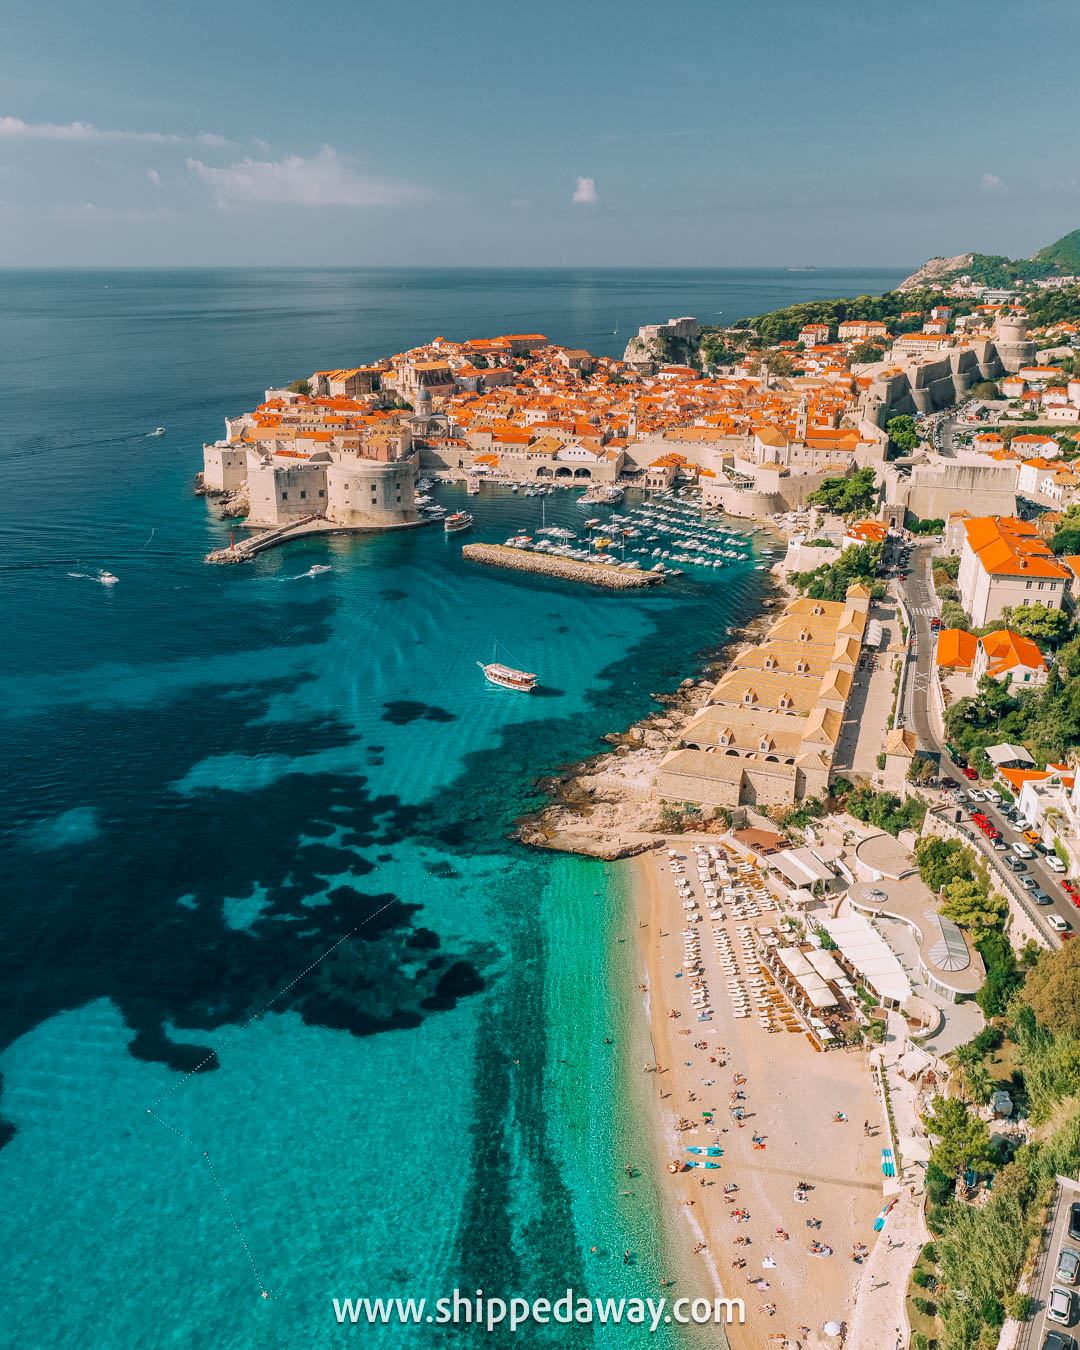 Best Dubrovnik Beaches - Dubrovnik Beaches - Best Beaches in Dubrovnik - Dubrovnik Beaches Guide - Best Beaches in Dubrovnik as recommended by a local - Banje Beach